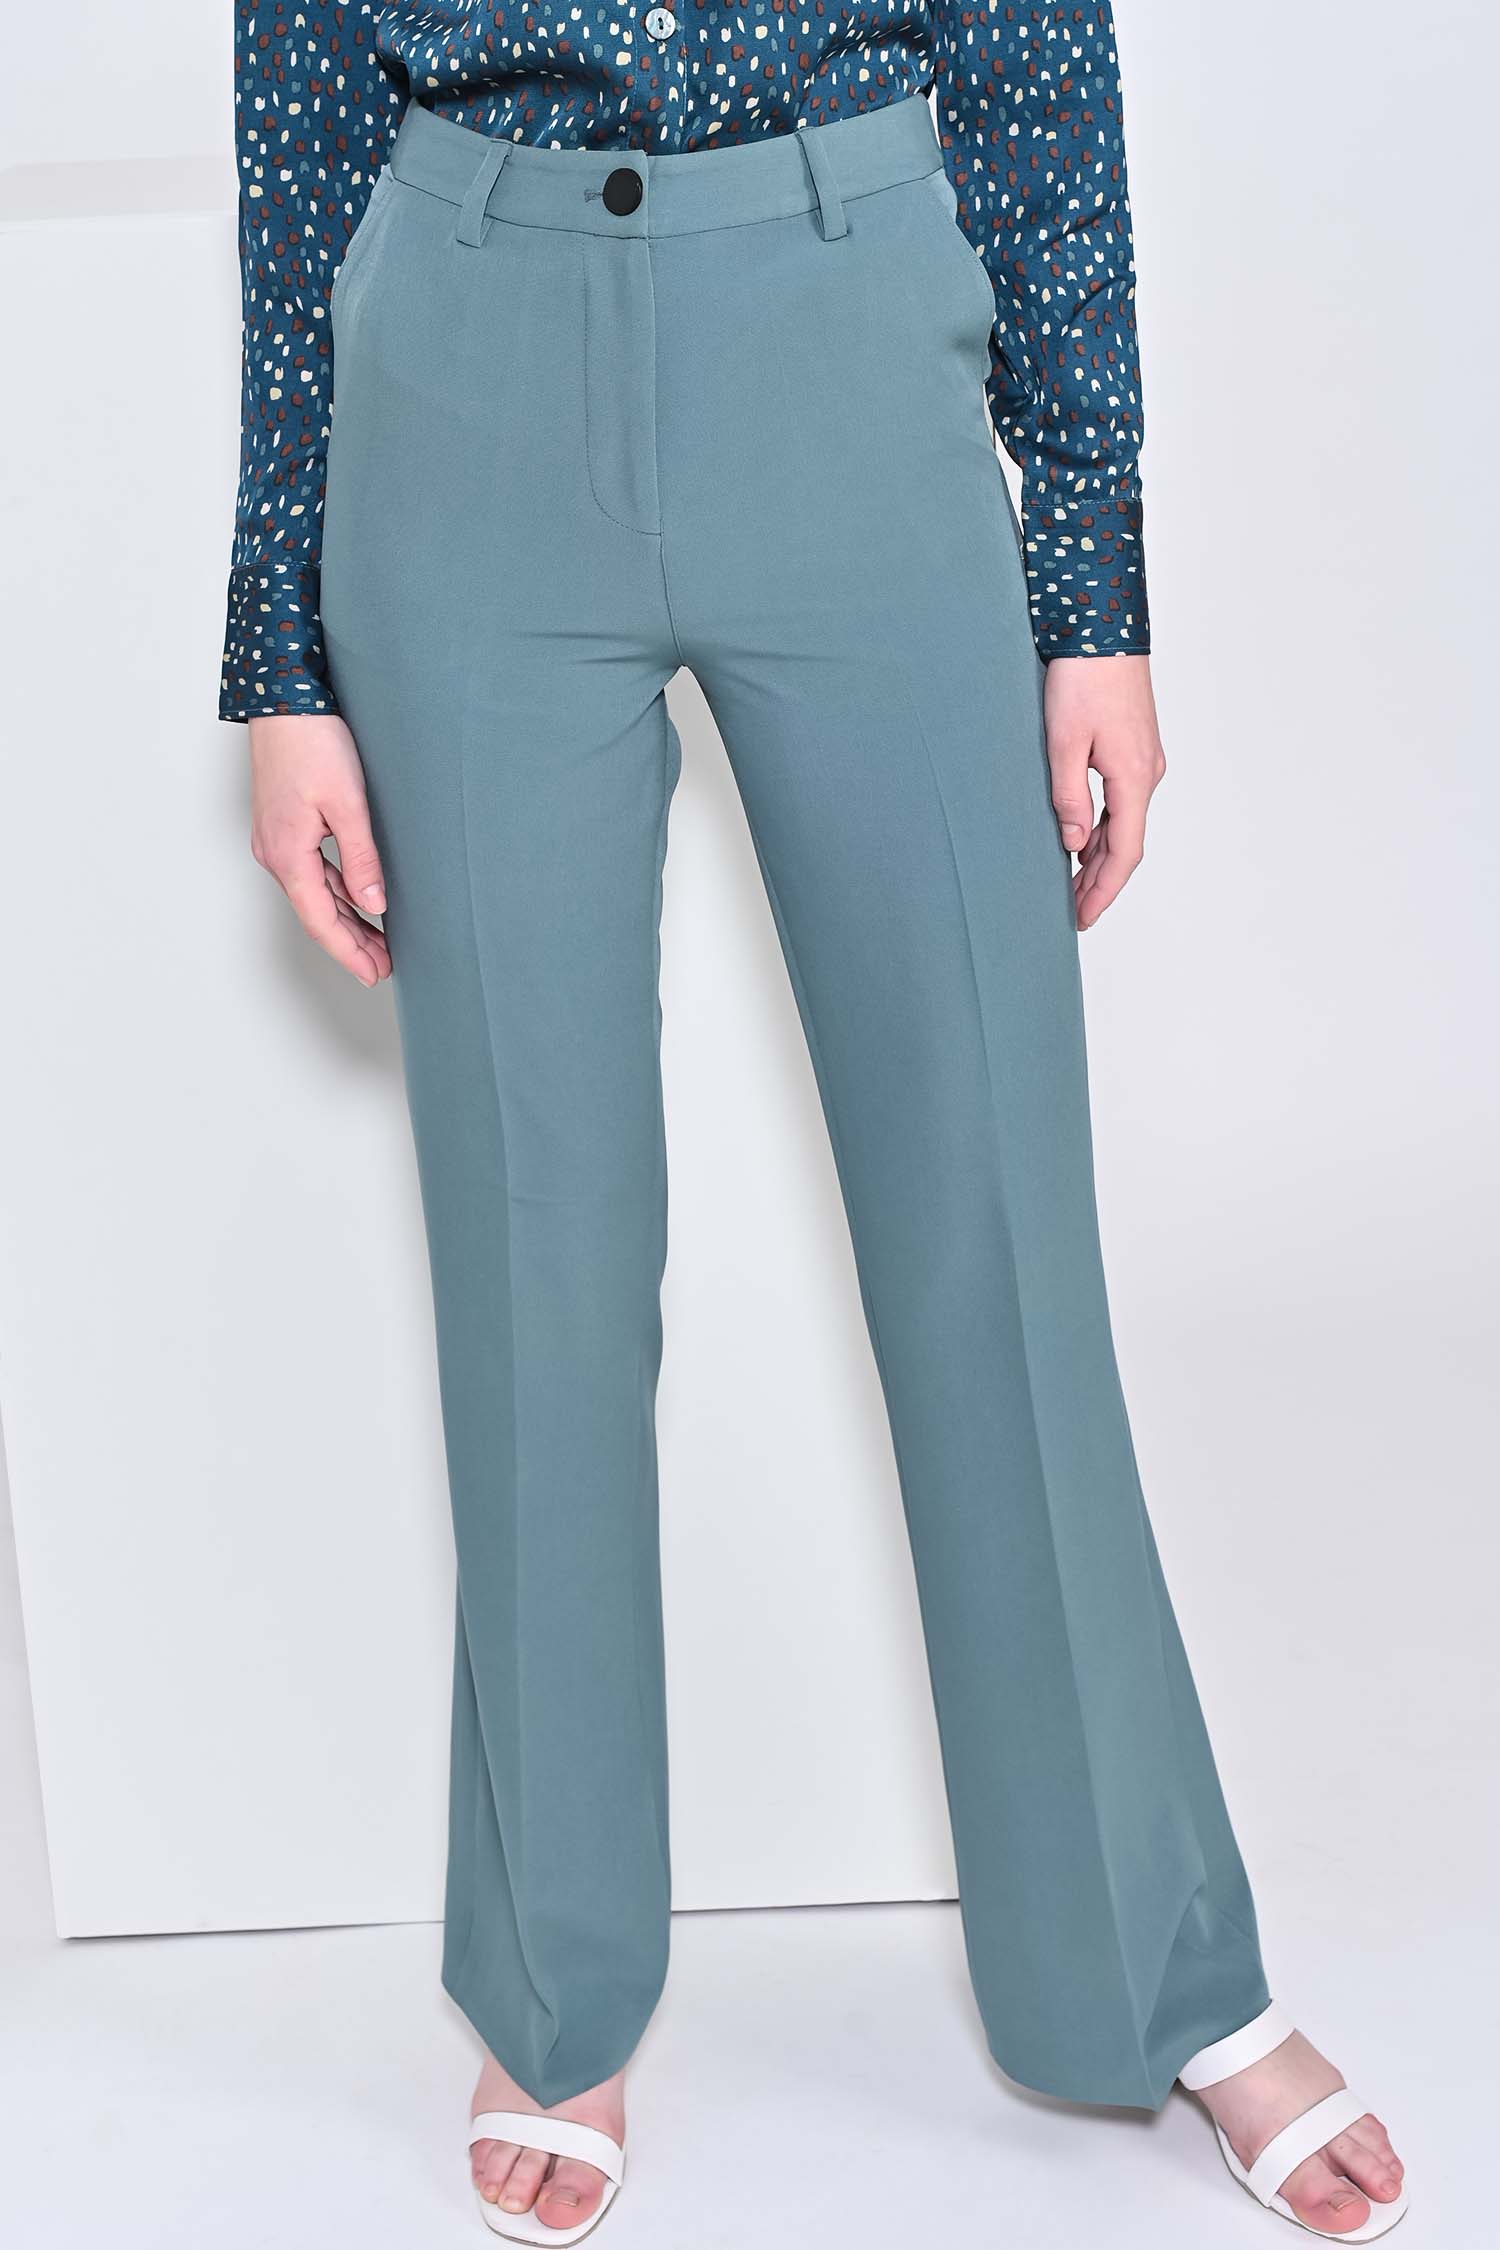 Buy Now Be Indi Women Green Regular Fit Self Design Cigarette Trousers – BE  INDI